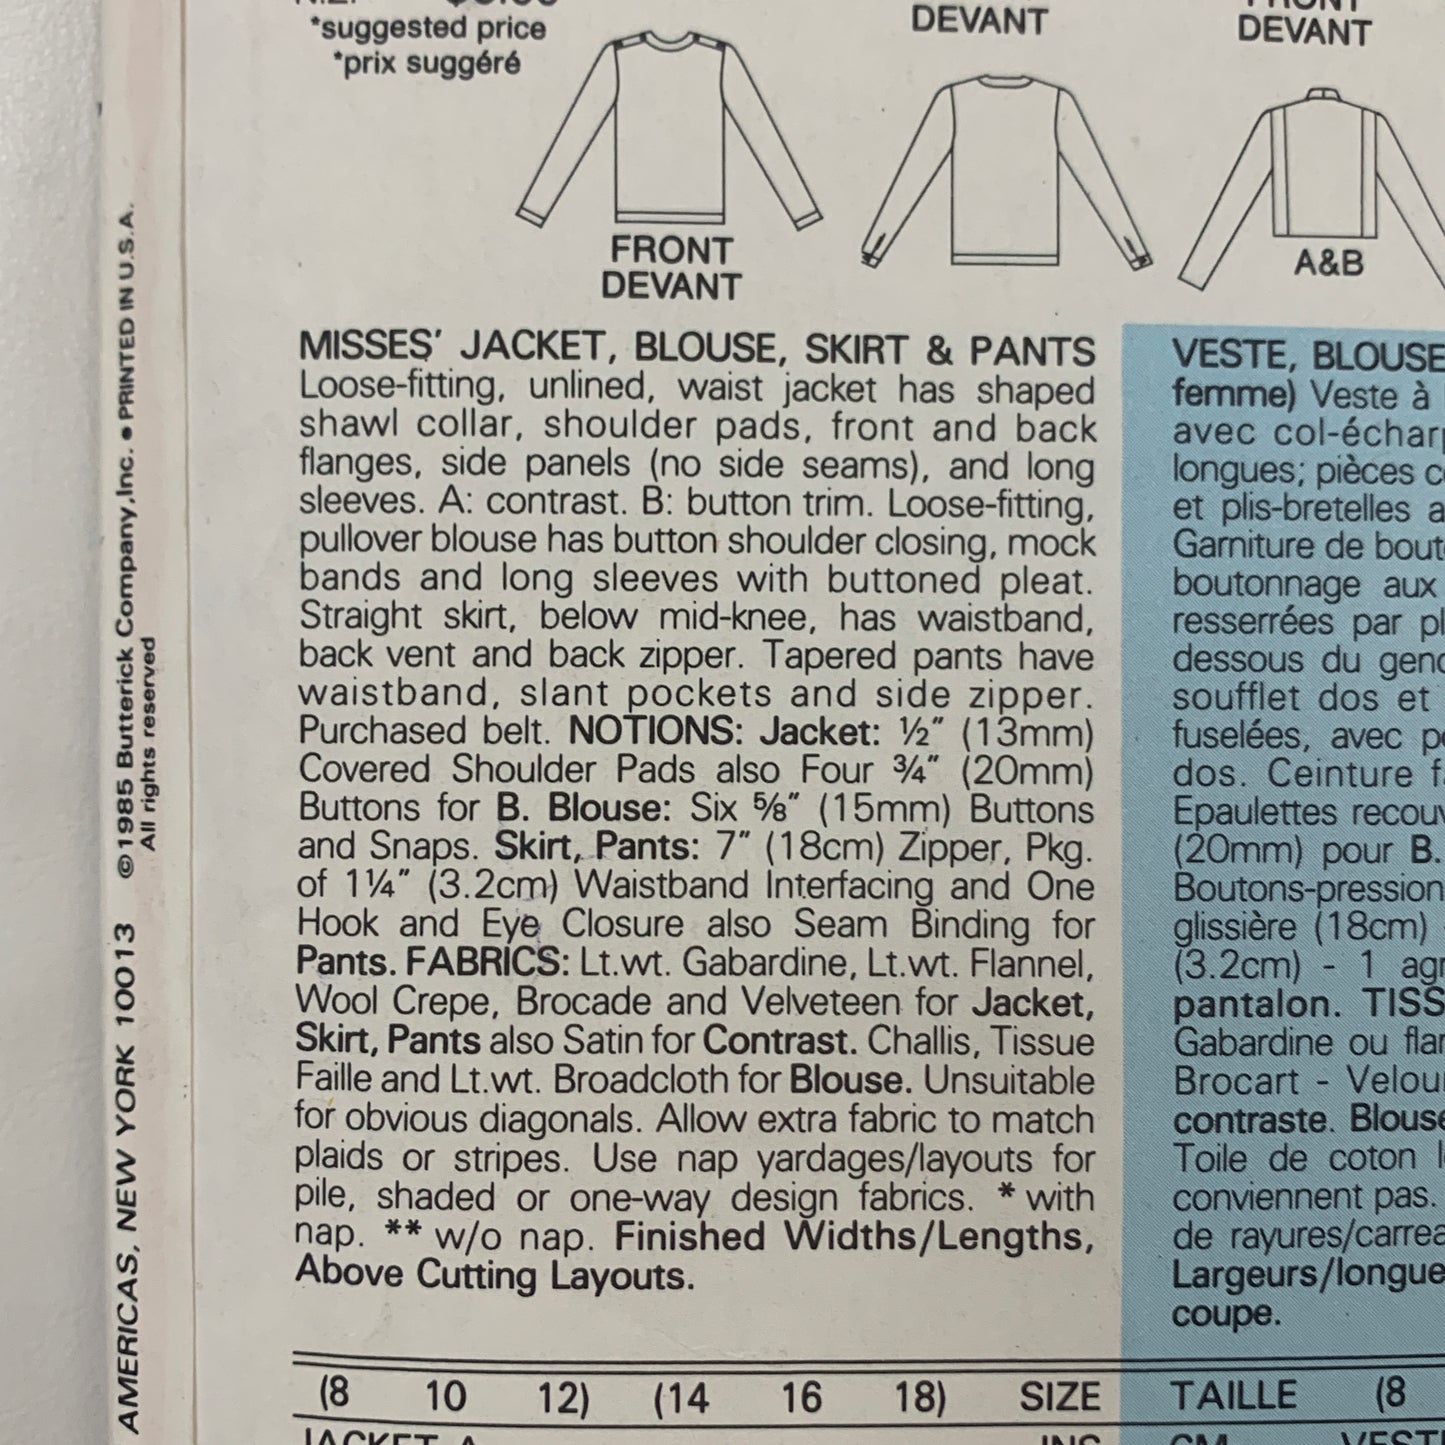 Jacket, Blouse, Skirt & Pants 80s Vintage Sewing Pattern Butterick 3531 Misses Size 14-16-18